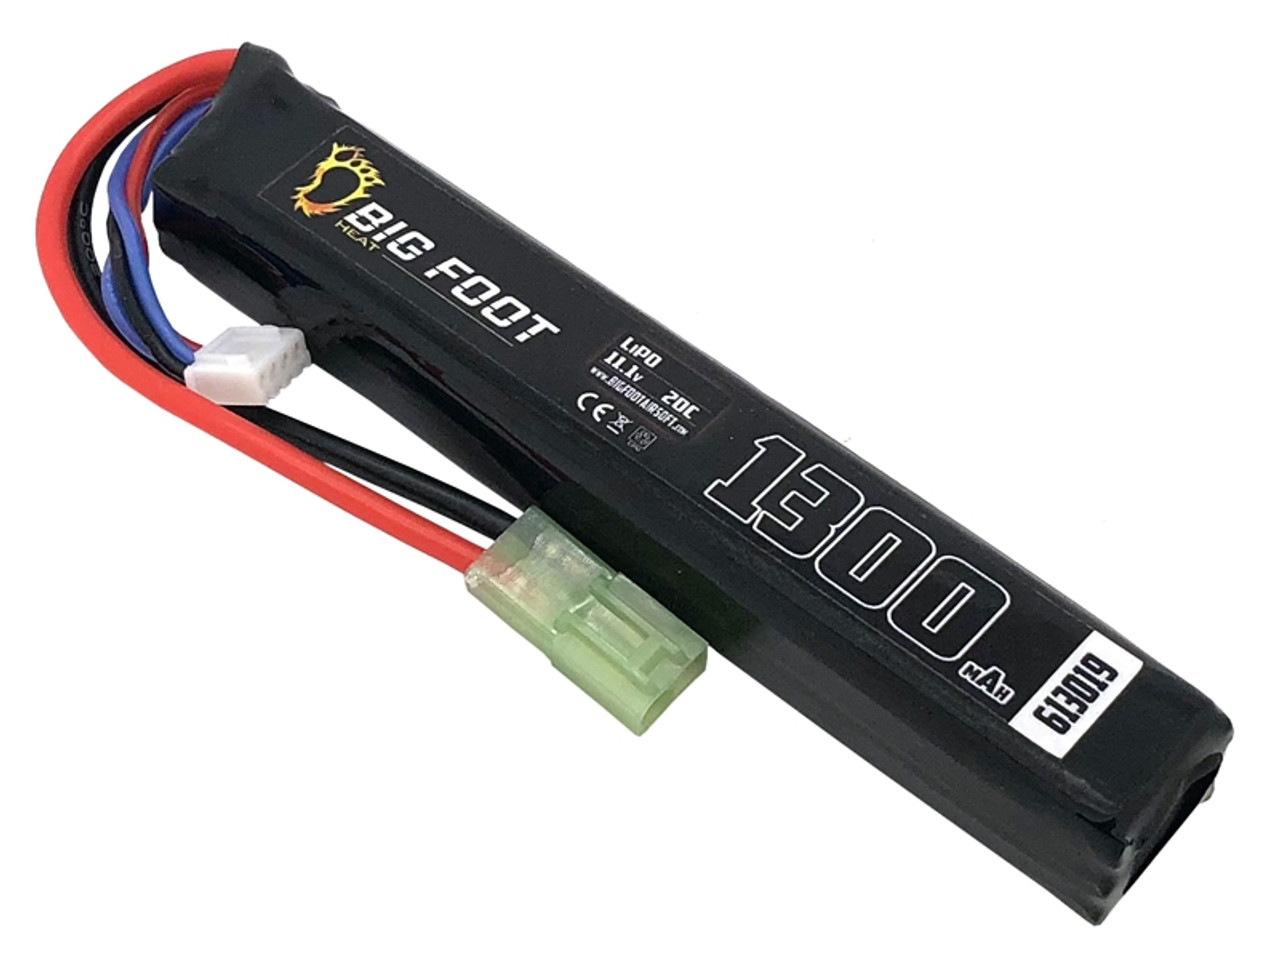 Big Foot Heat Lipo Battery 1300 mAh 11.1v 20c (Stick - 130mm)